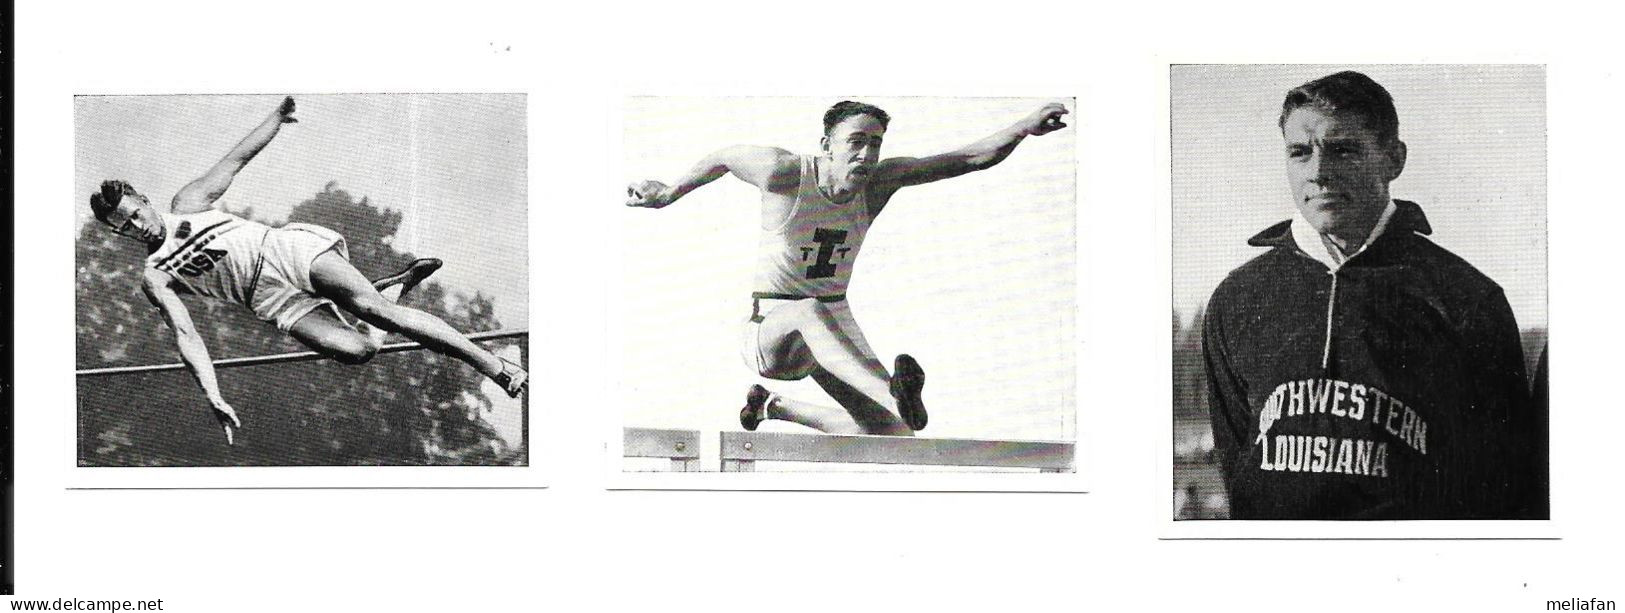 AH71 - IMAGES CIGARETTES LIGA - REKORD IM SPORT - JOHN MORRIS - WALTER MARTY - CHARLES BROOKINS - Leichtathletik